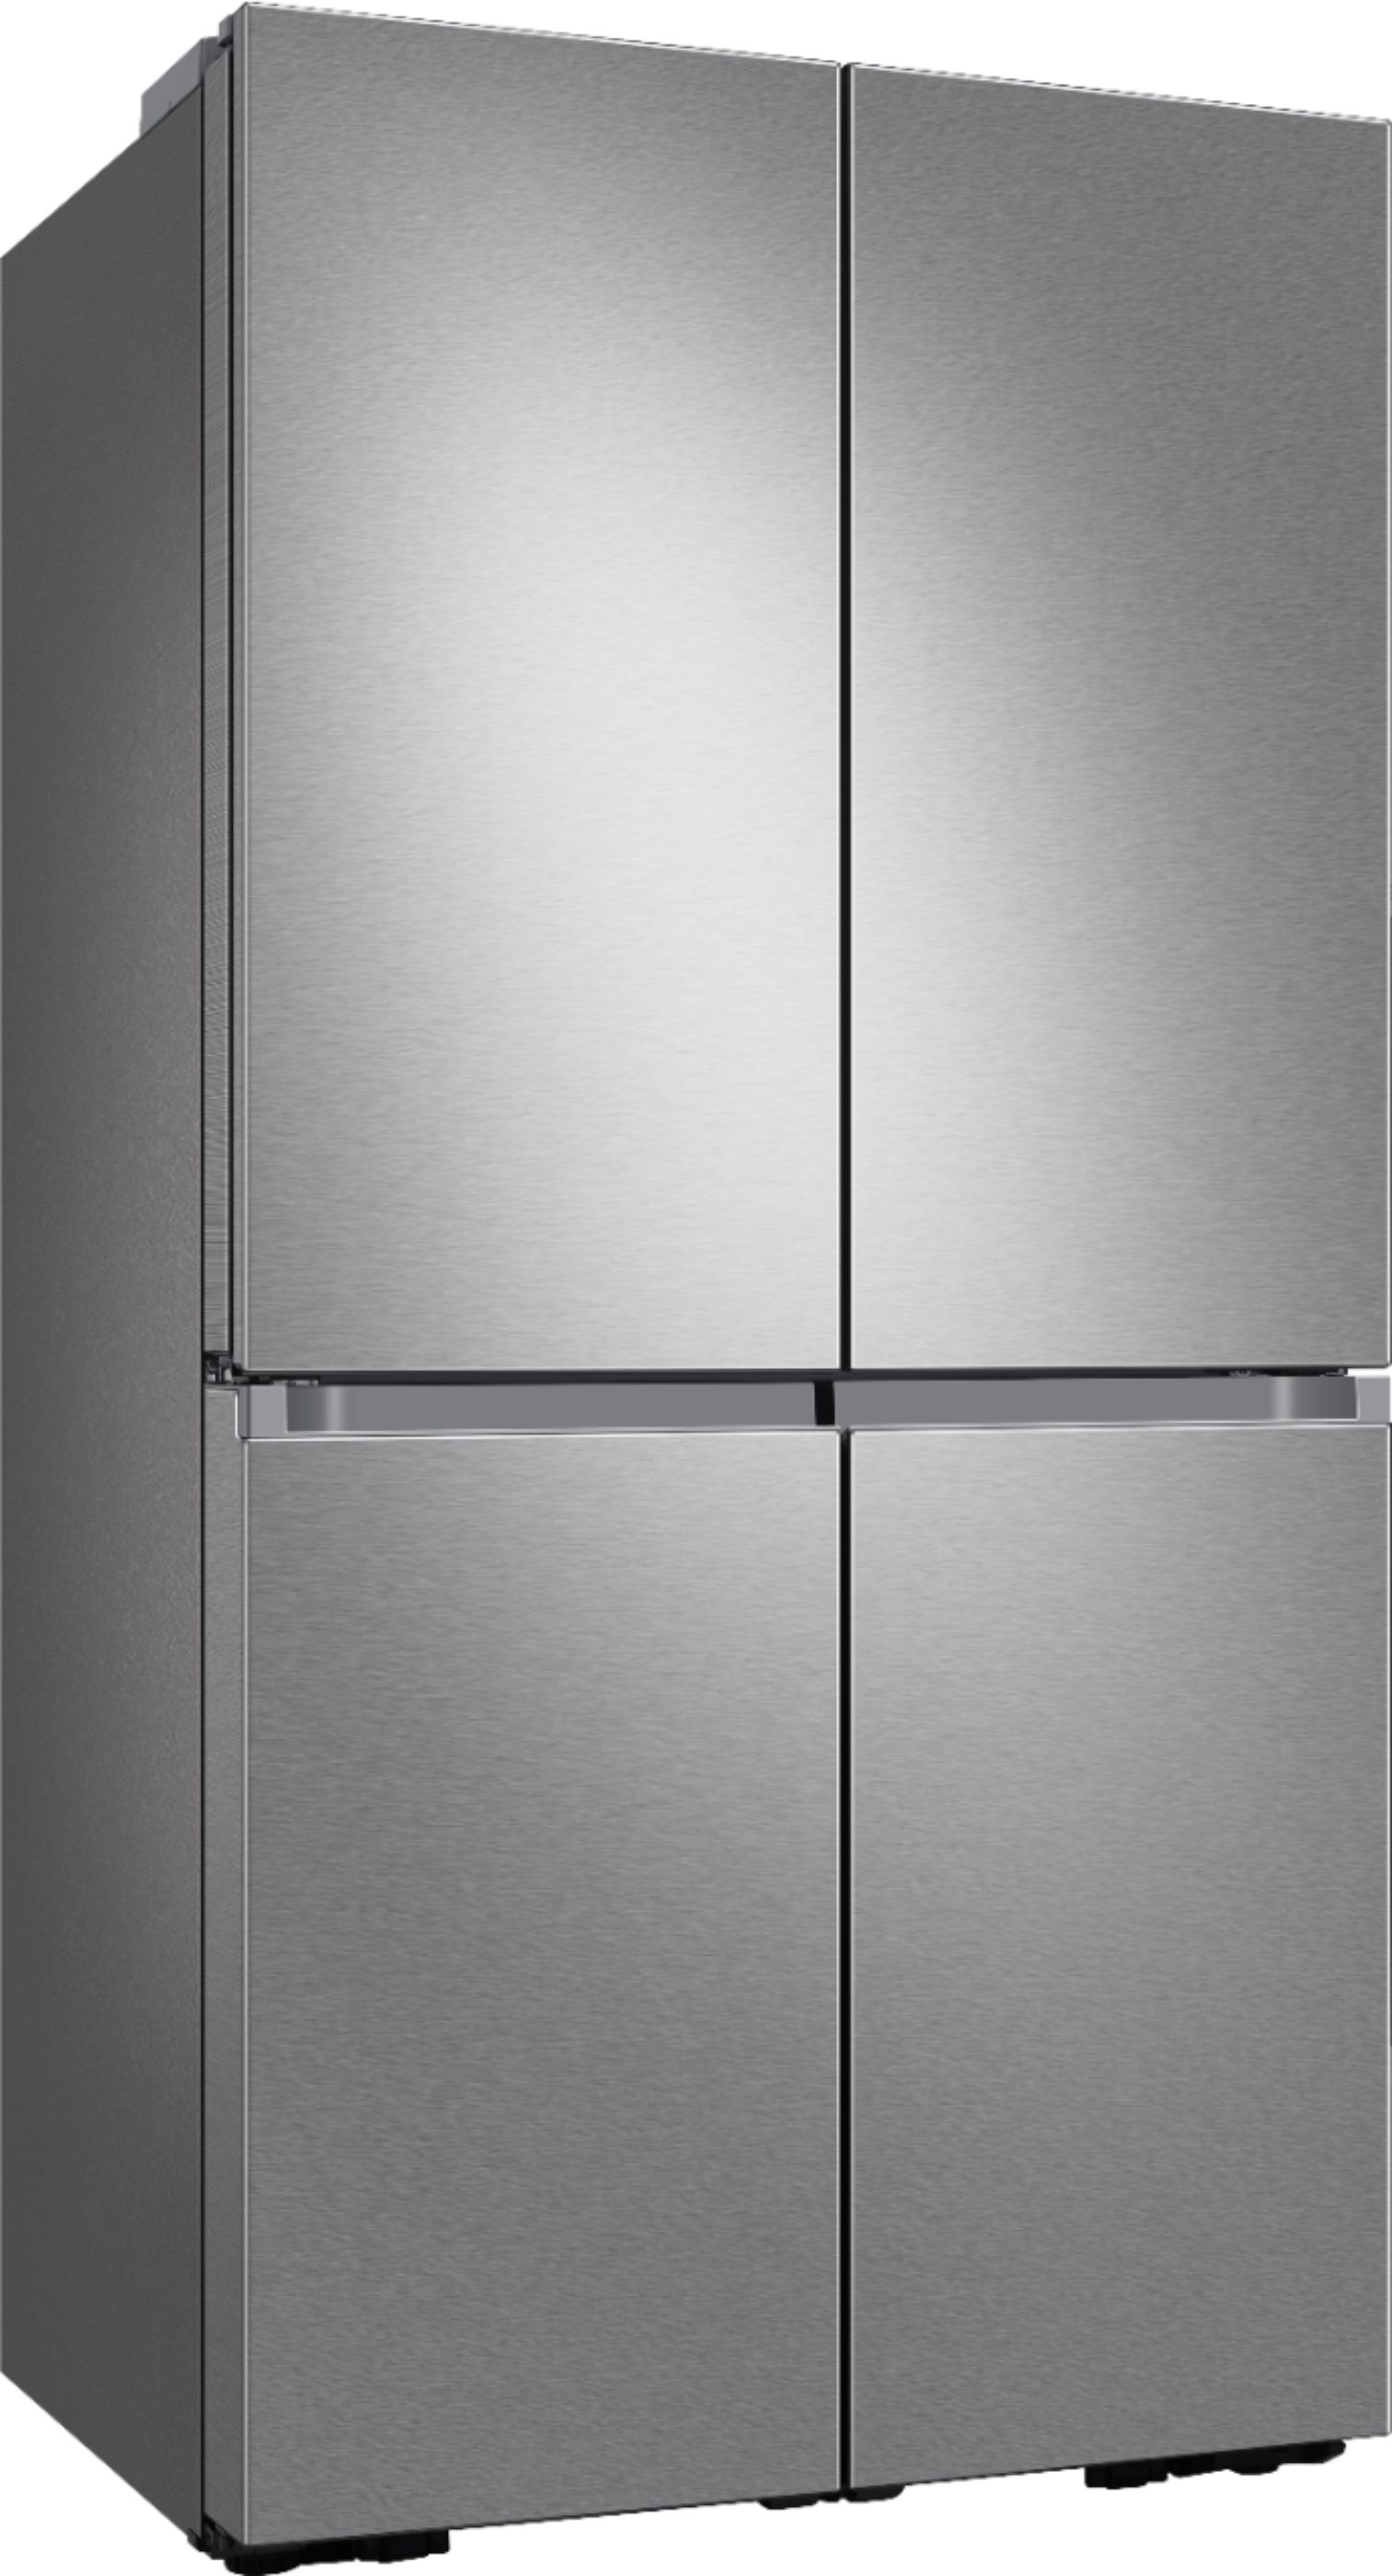 Left View: Samsung - Bespoke 23 cu. ft. Counter Depth 4-Door French Door Refrigerator with AutoFill Water Pitcher - Custom Panel Ready